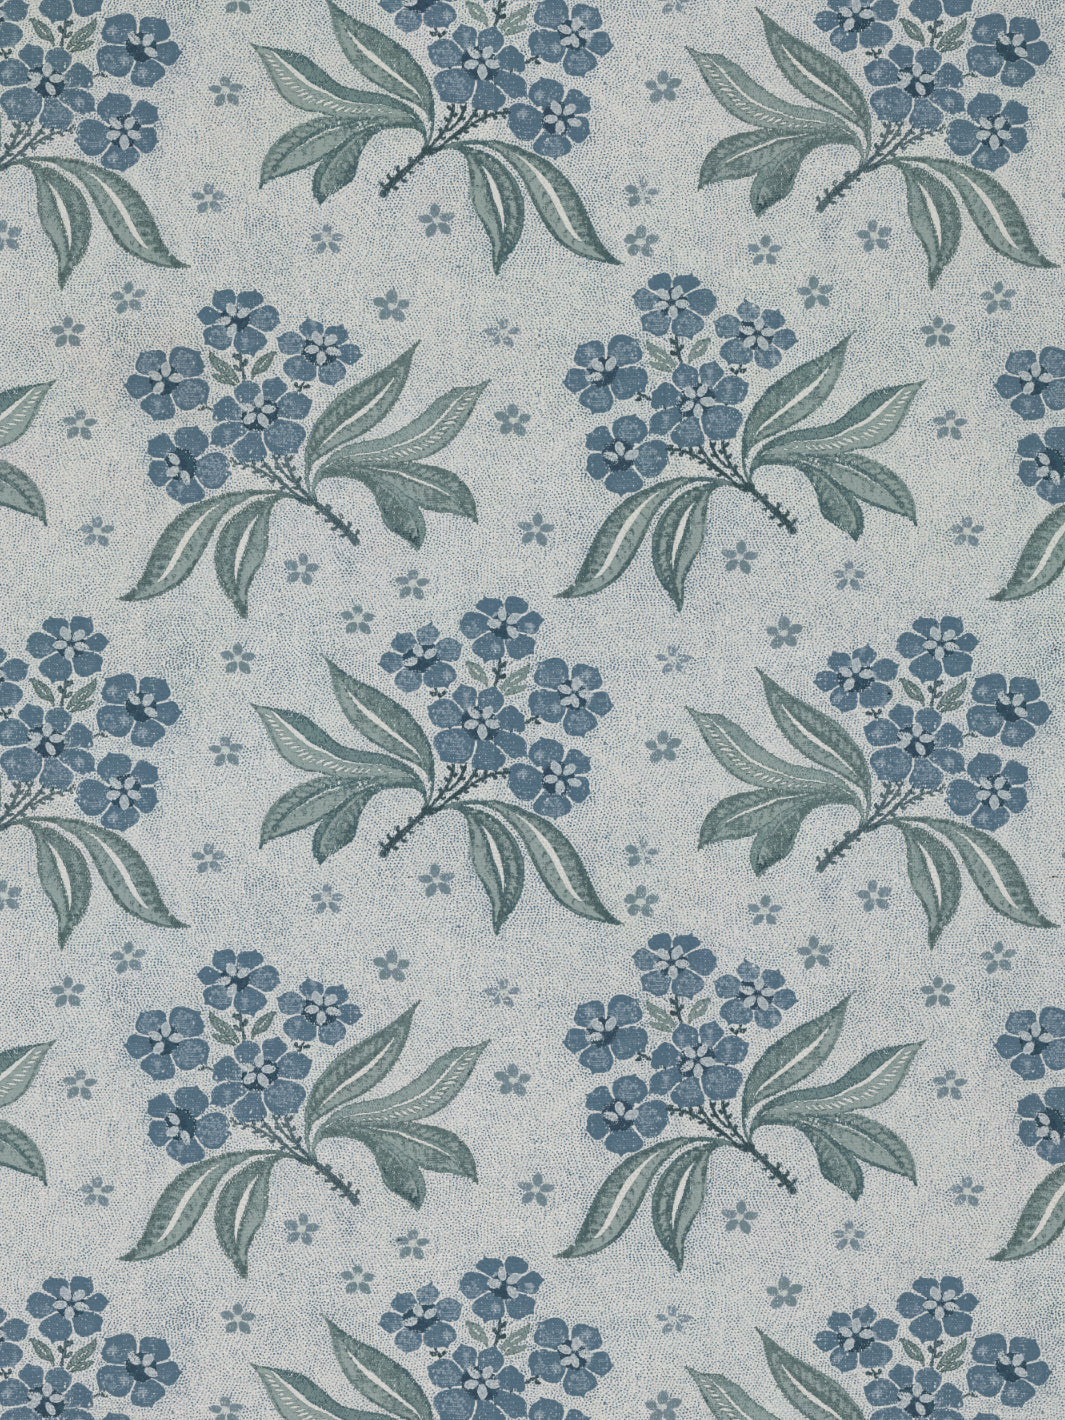 'Marian' Linen Fabric by Nathan Turner - Blue Aqua